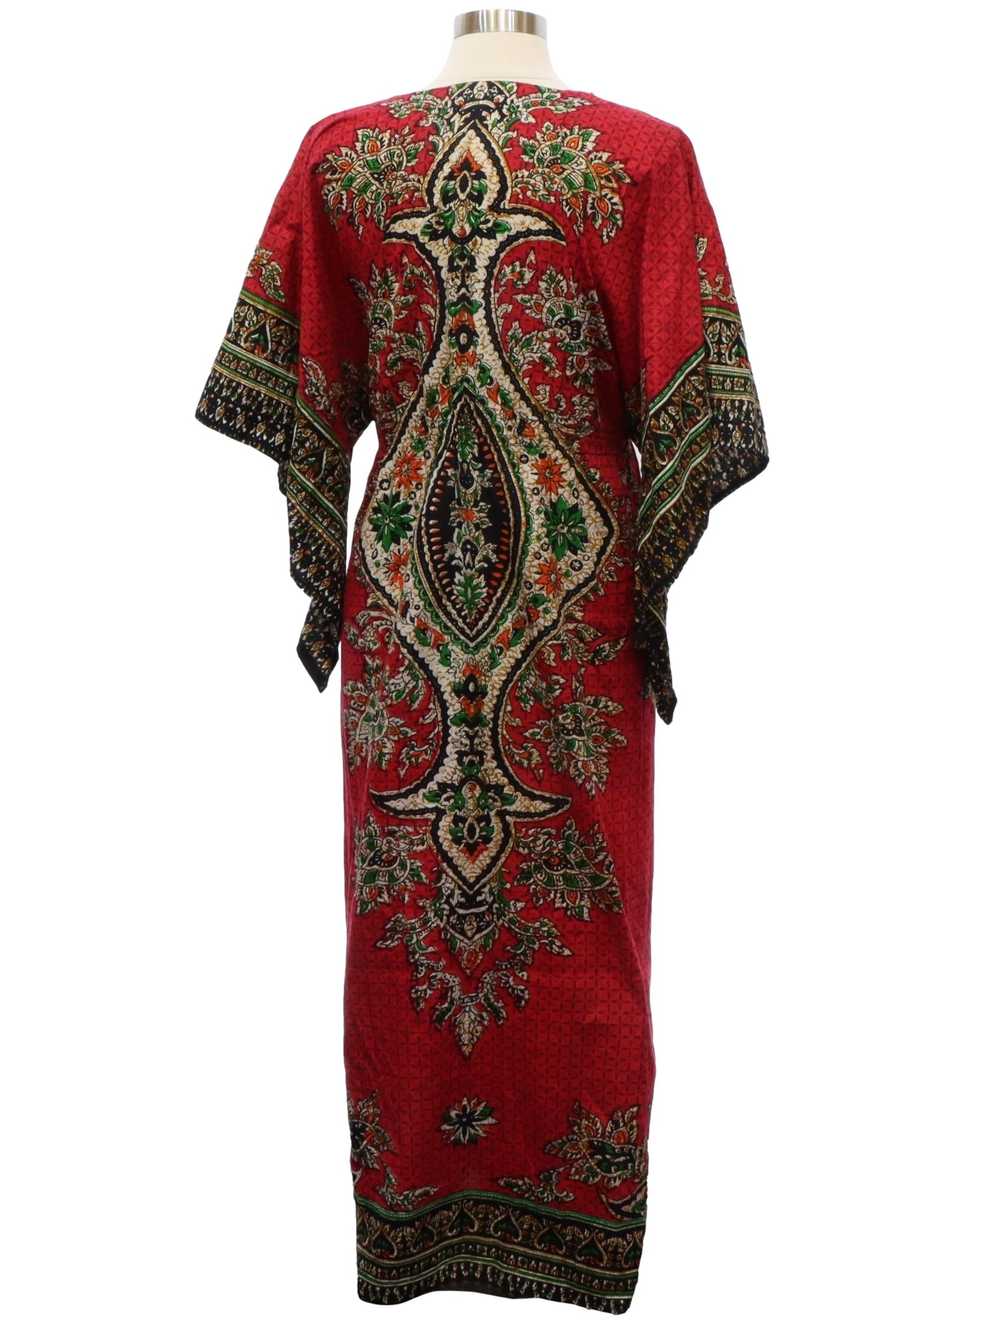 1980's Dashiki Dress - image 3